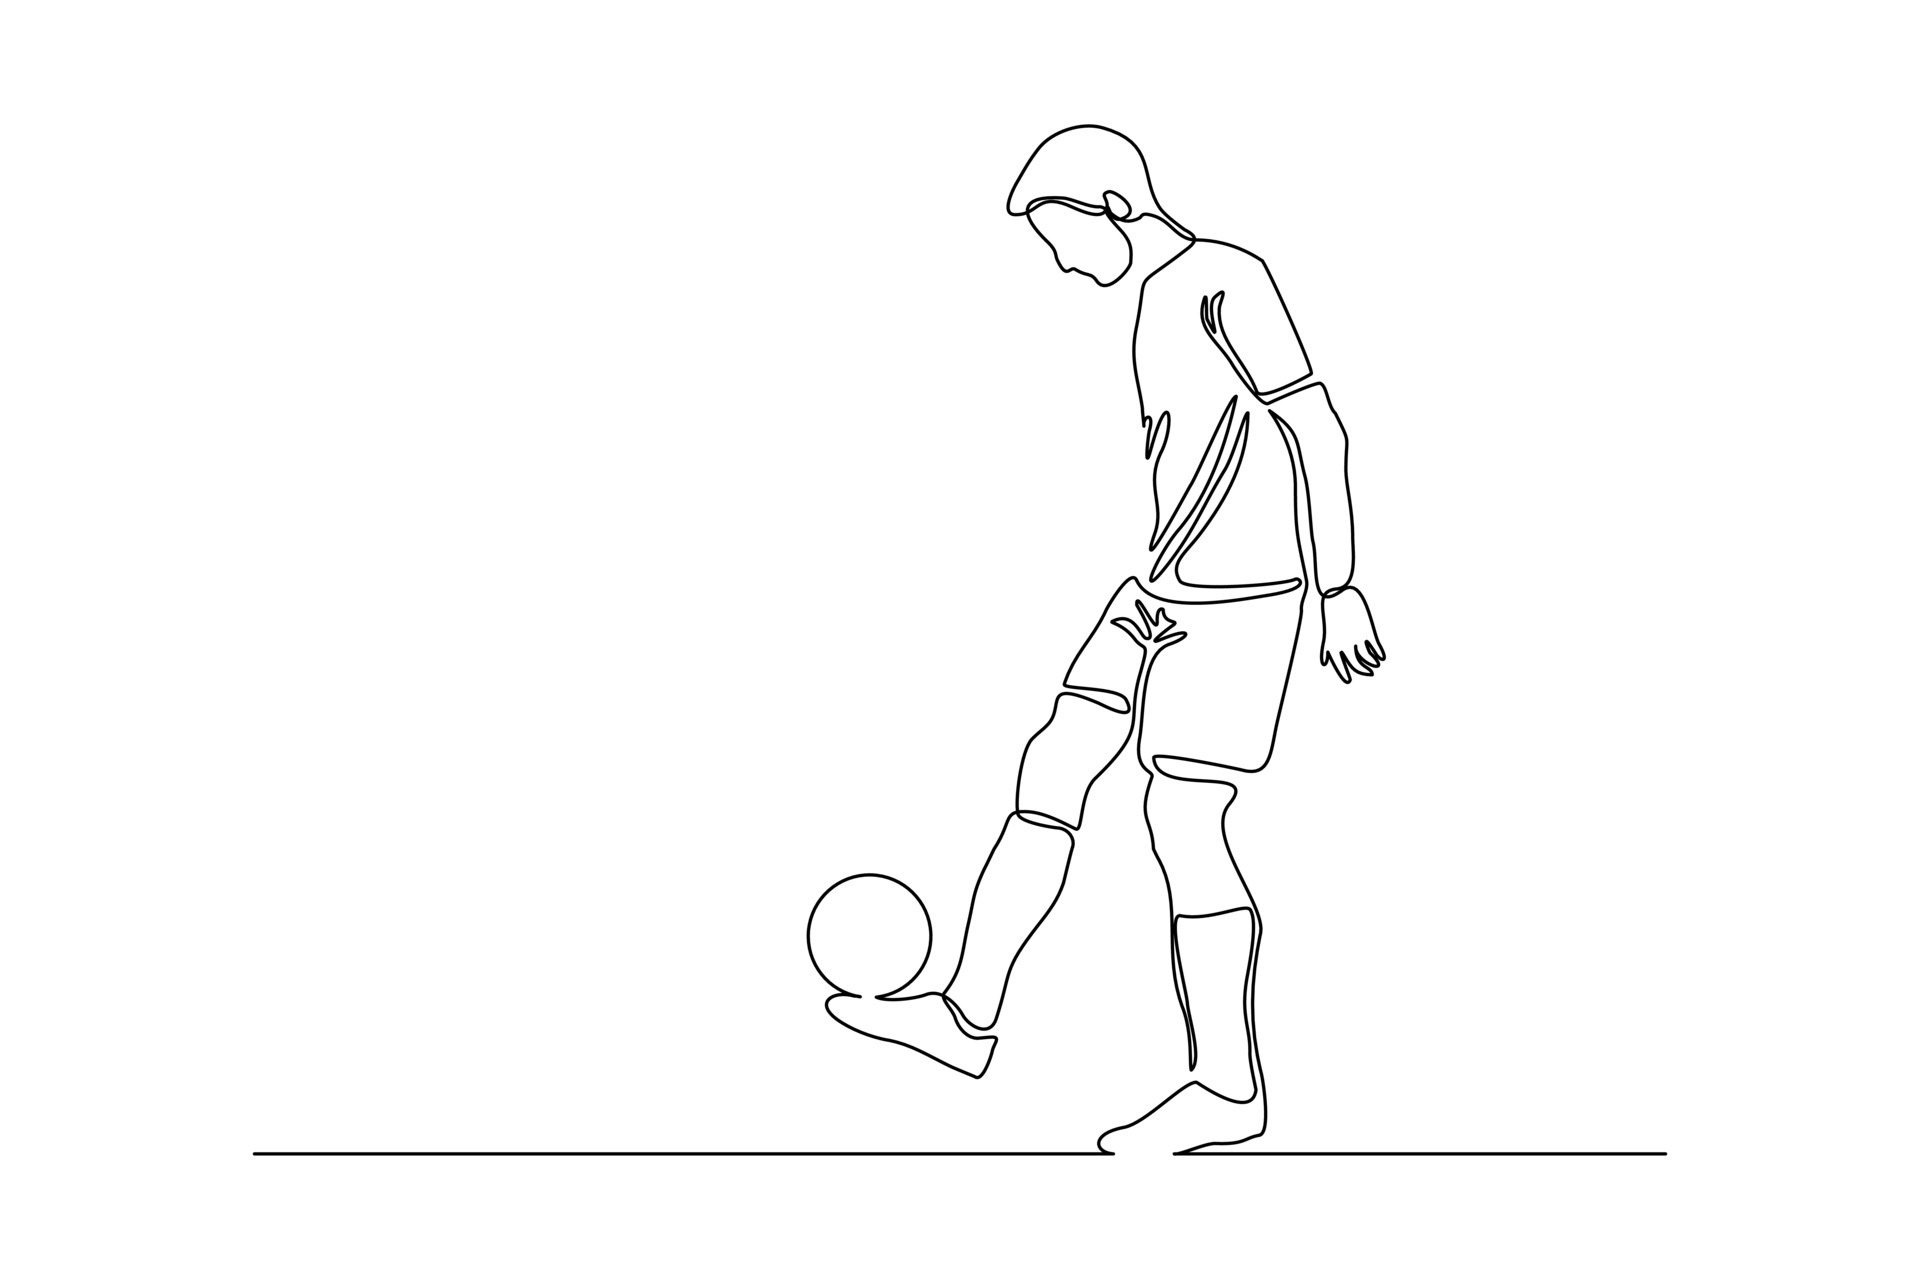 Cartoon Football Drawing - How To Draw A Cartoon Football Step By Step